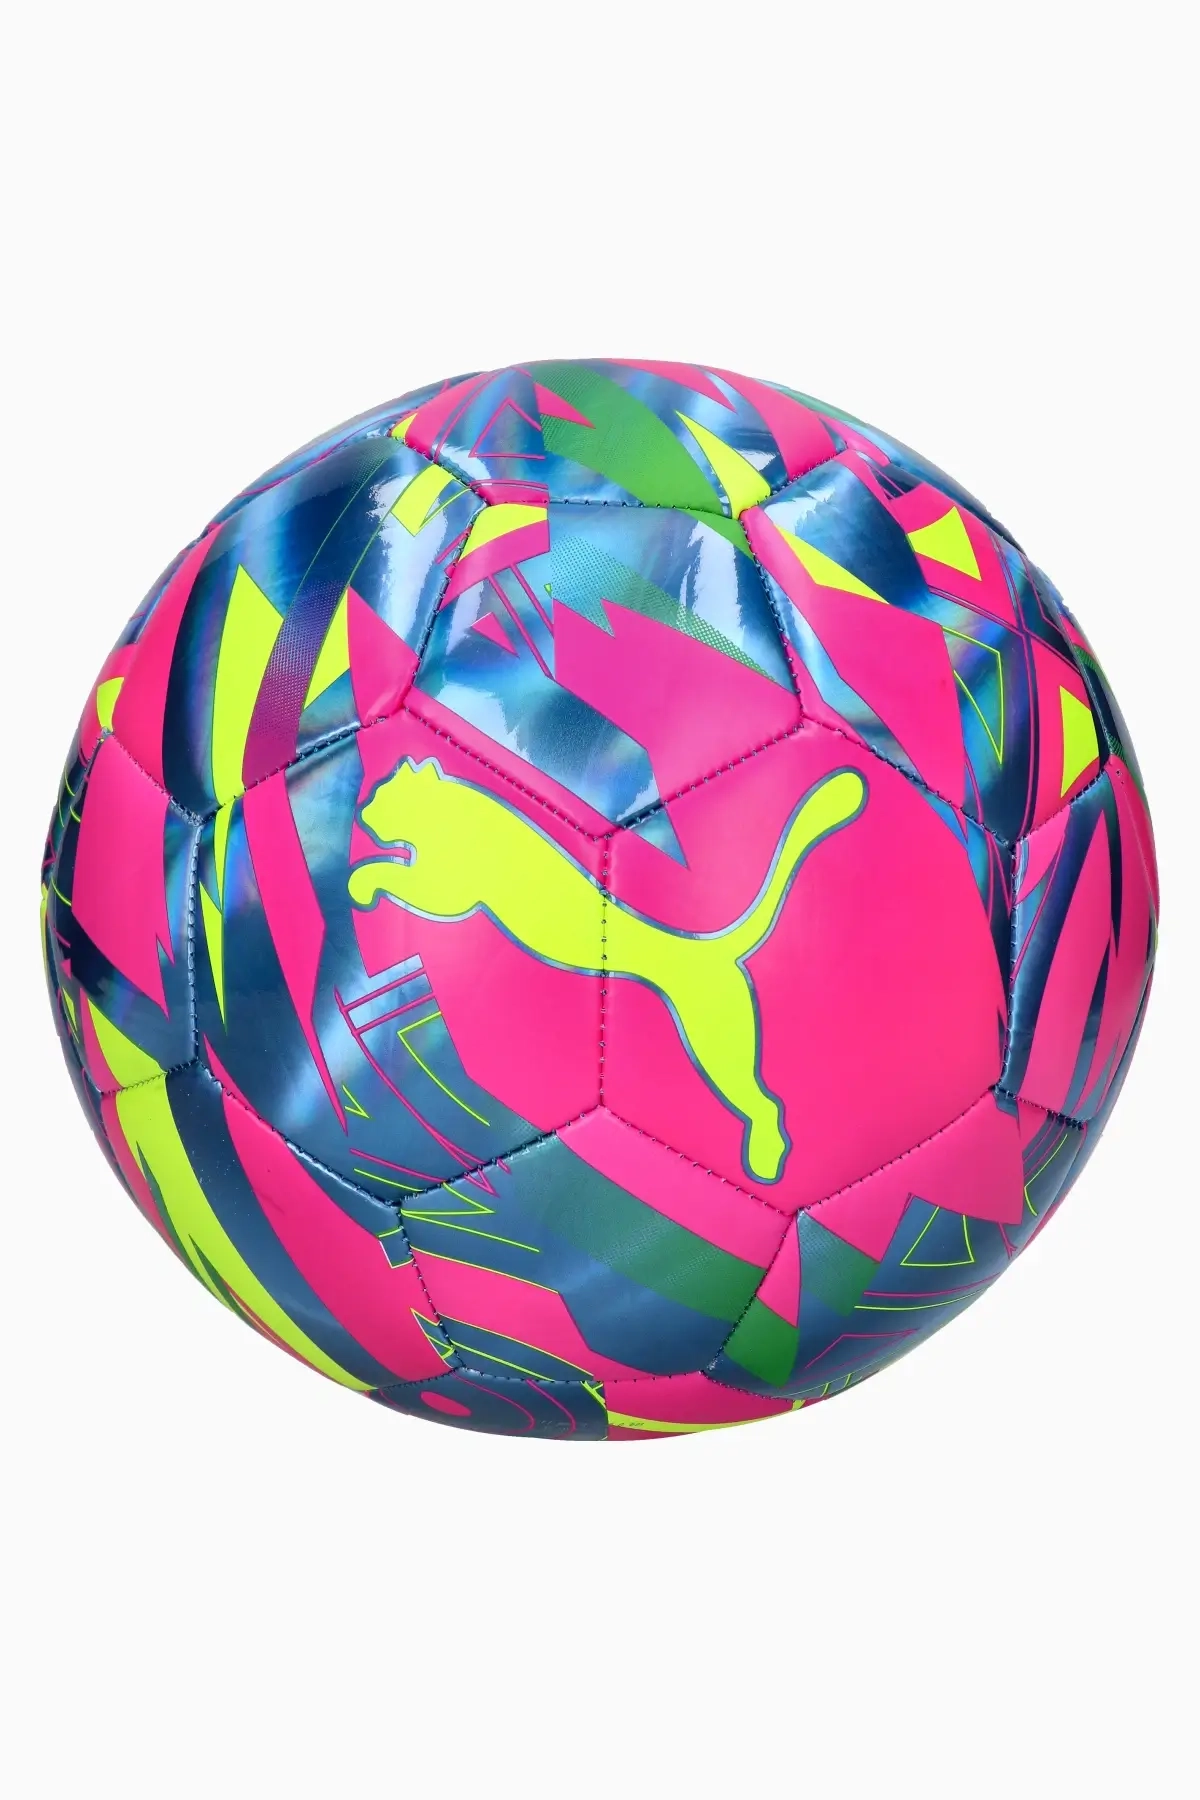 Ball Puma Graphic - Football | 5 equipment boots & size Energy R-GOL.com